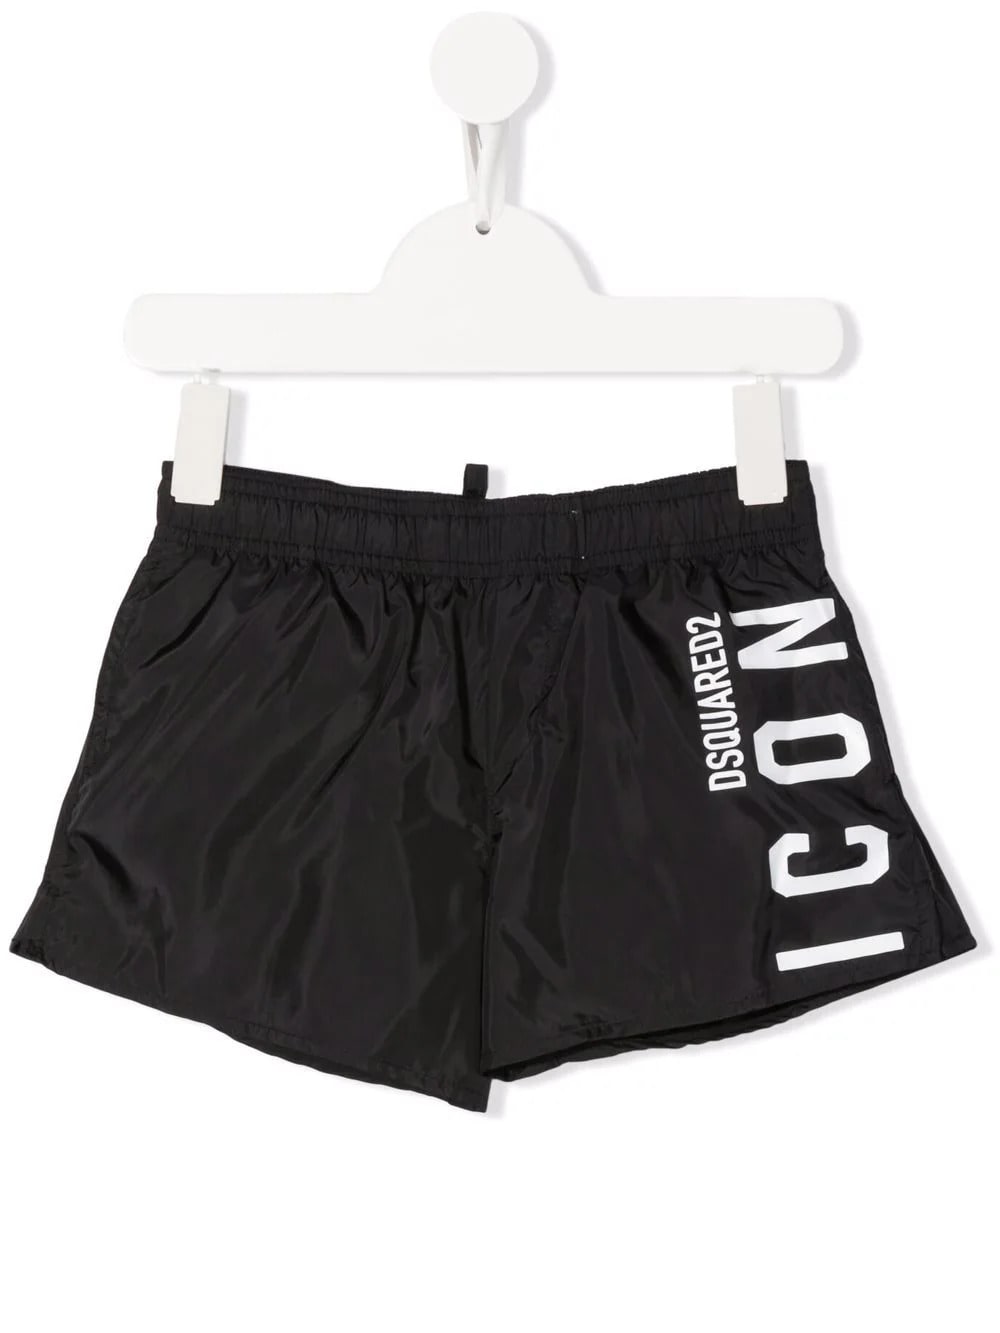 Kids Black Swim Shorts With Icon Dsquared2 Logo